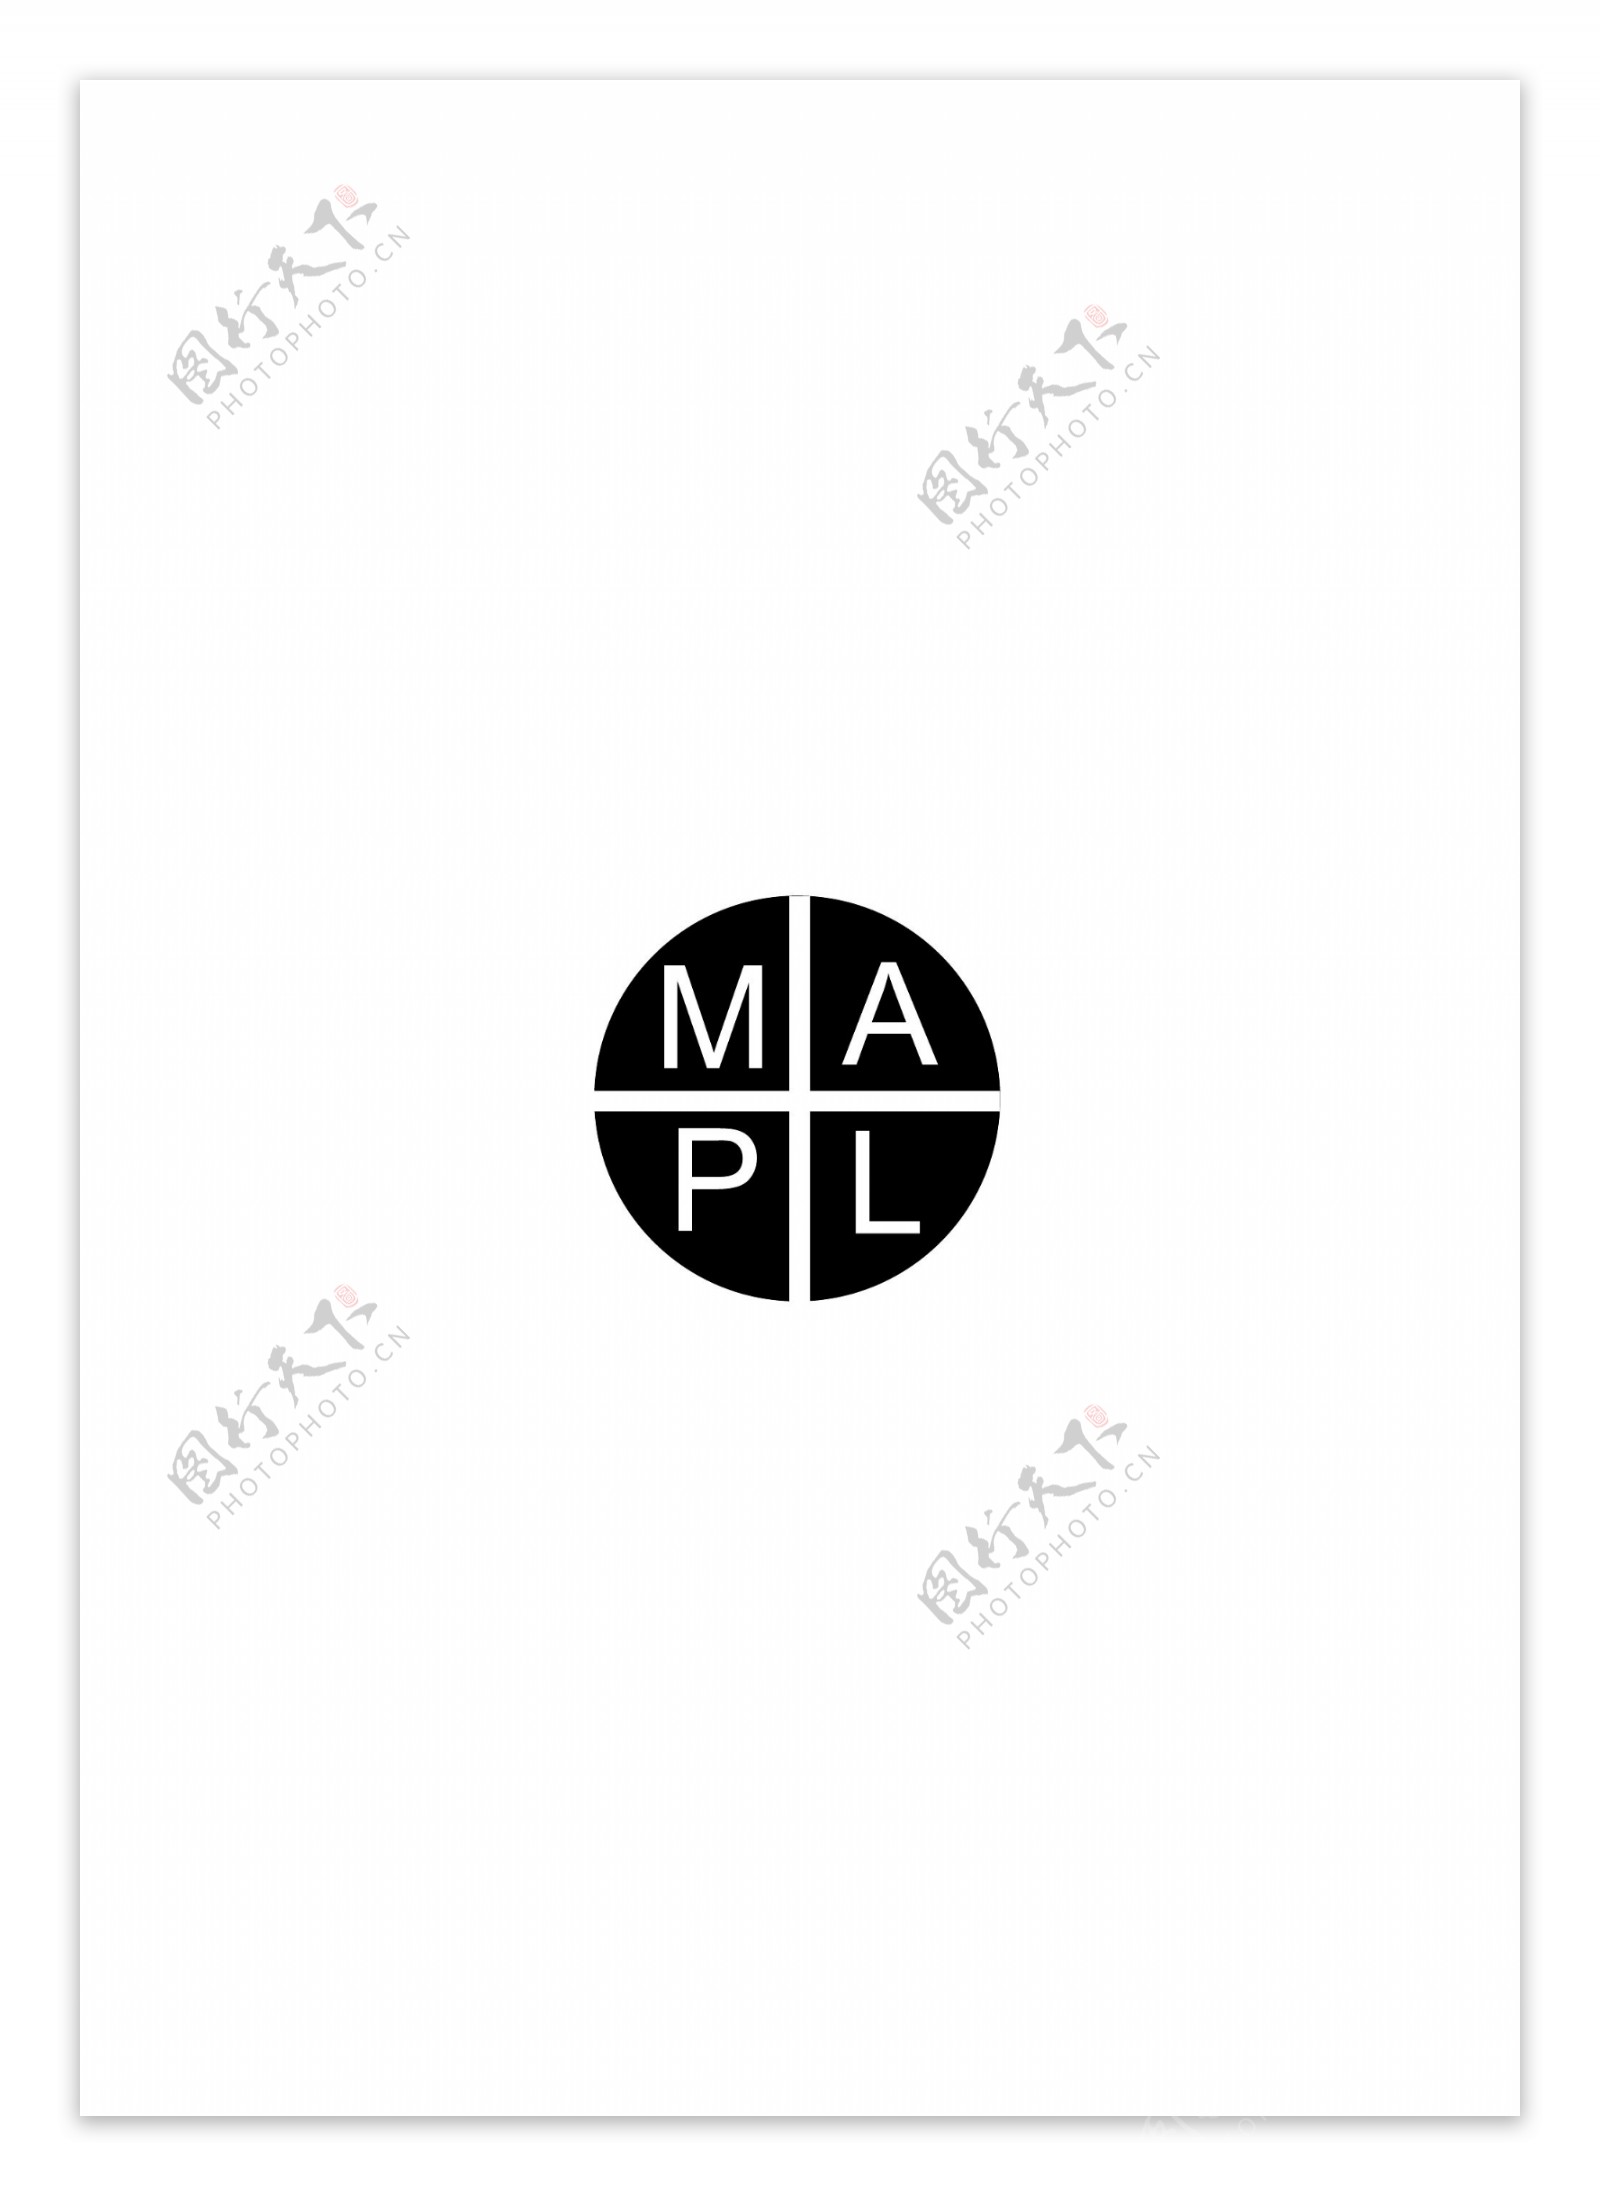 MAPLlogo设计欣赏MAPL唱片专辑标志下载标志设计欣赏